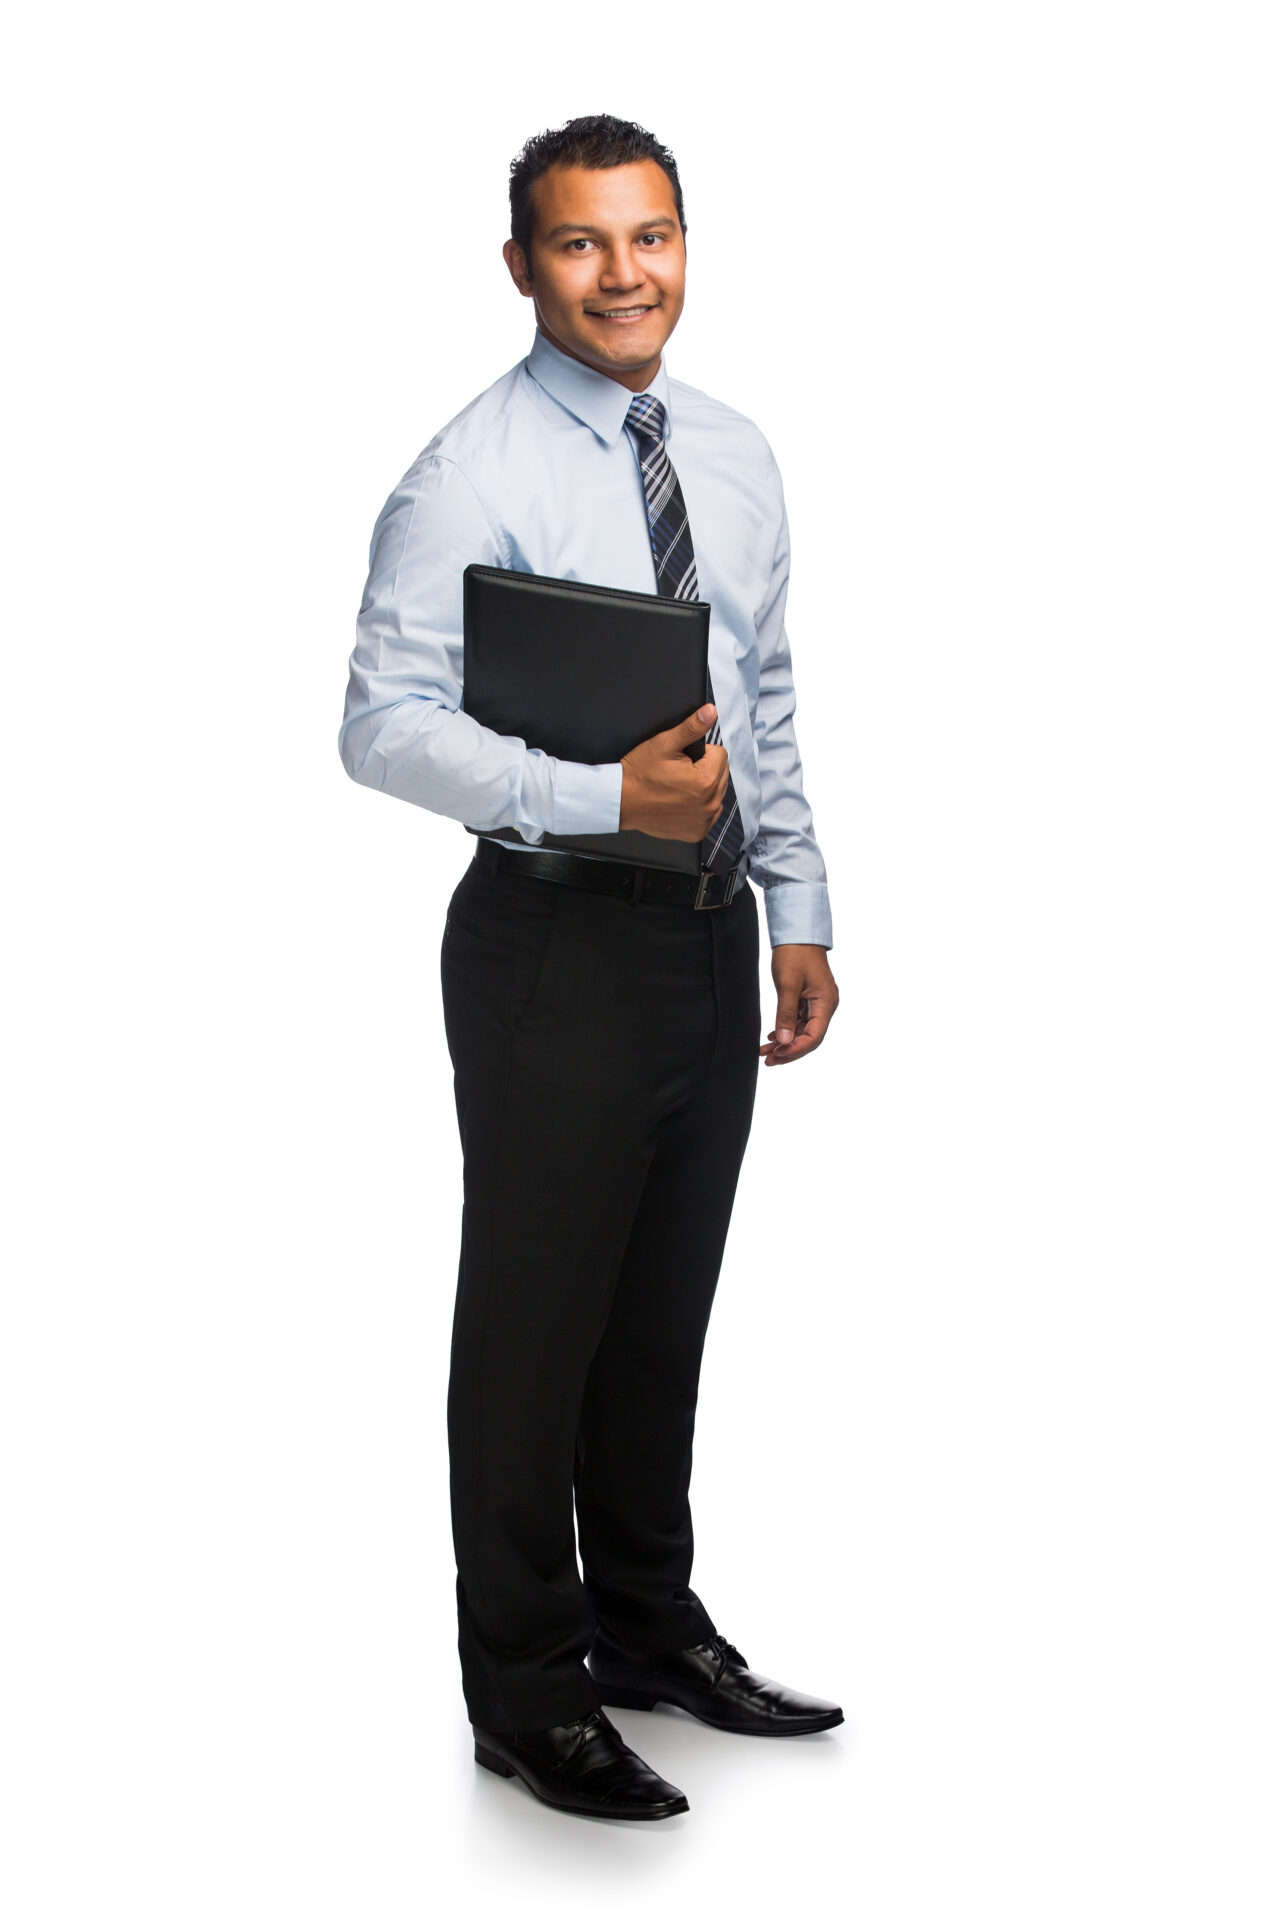 A young male secretary holding a folder.